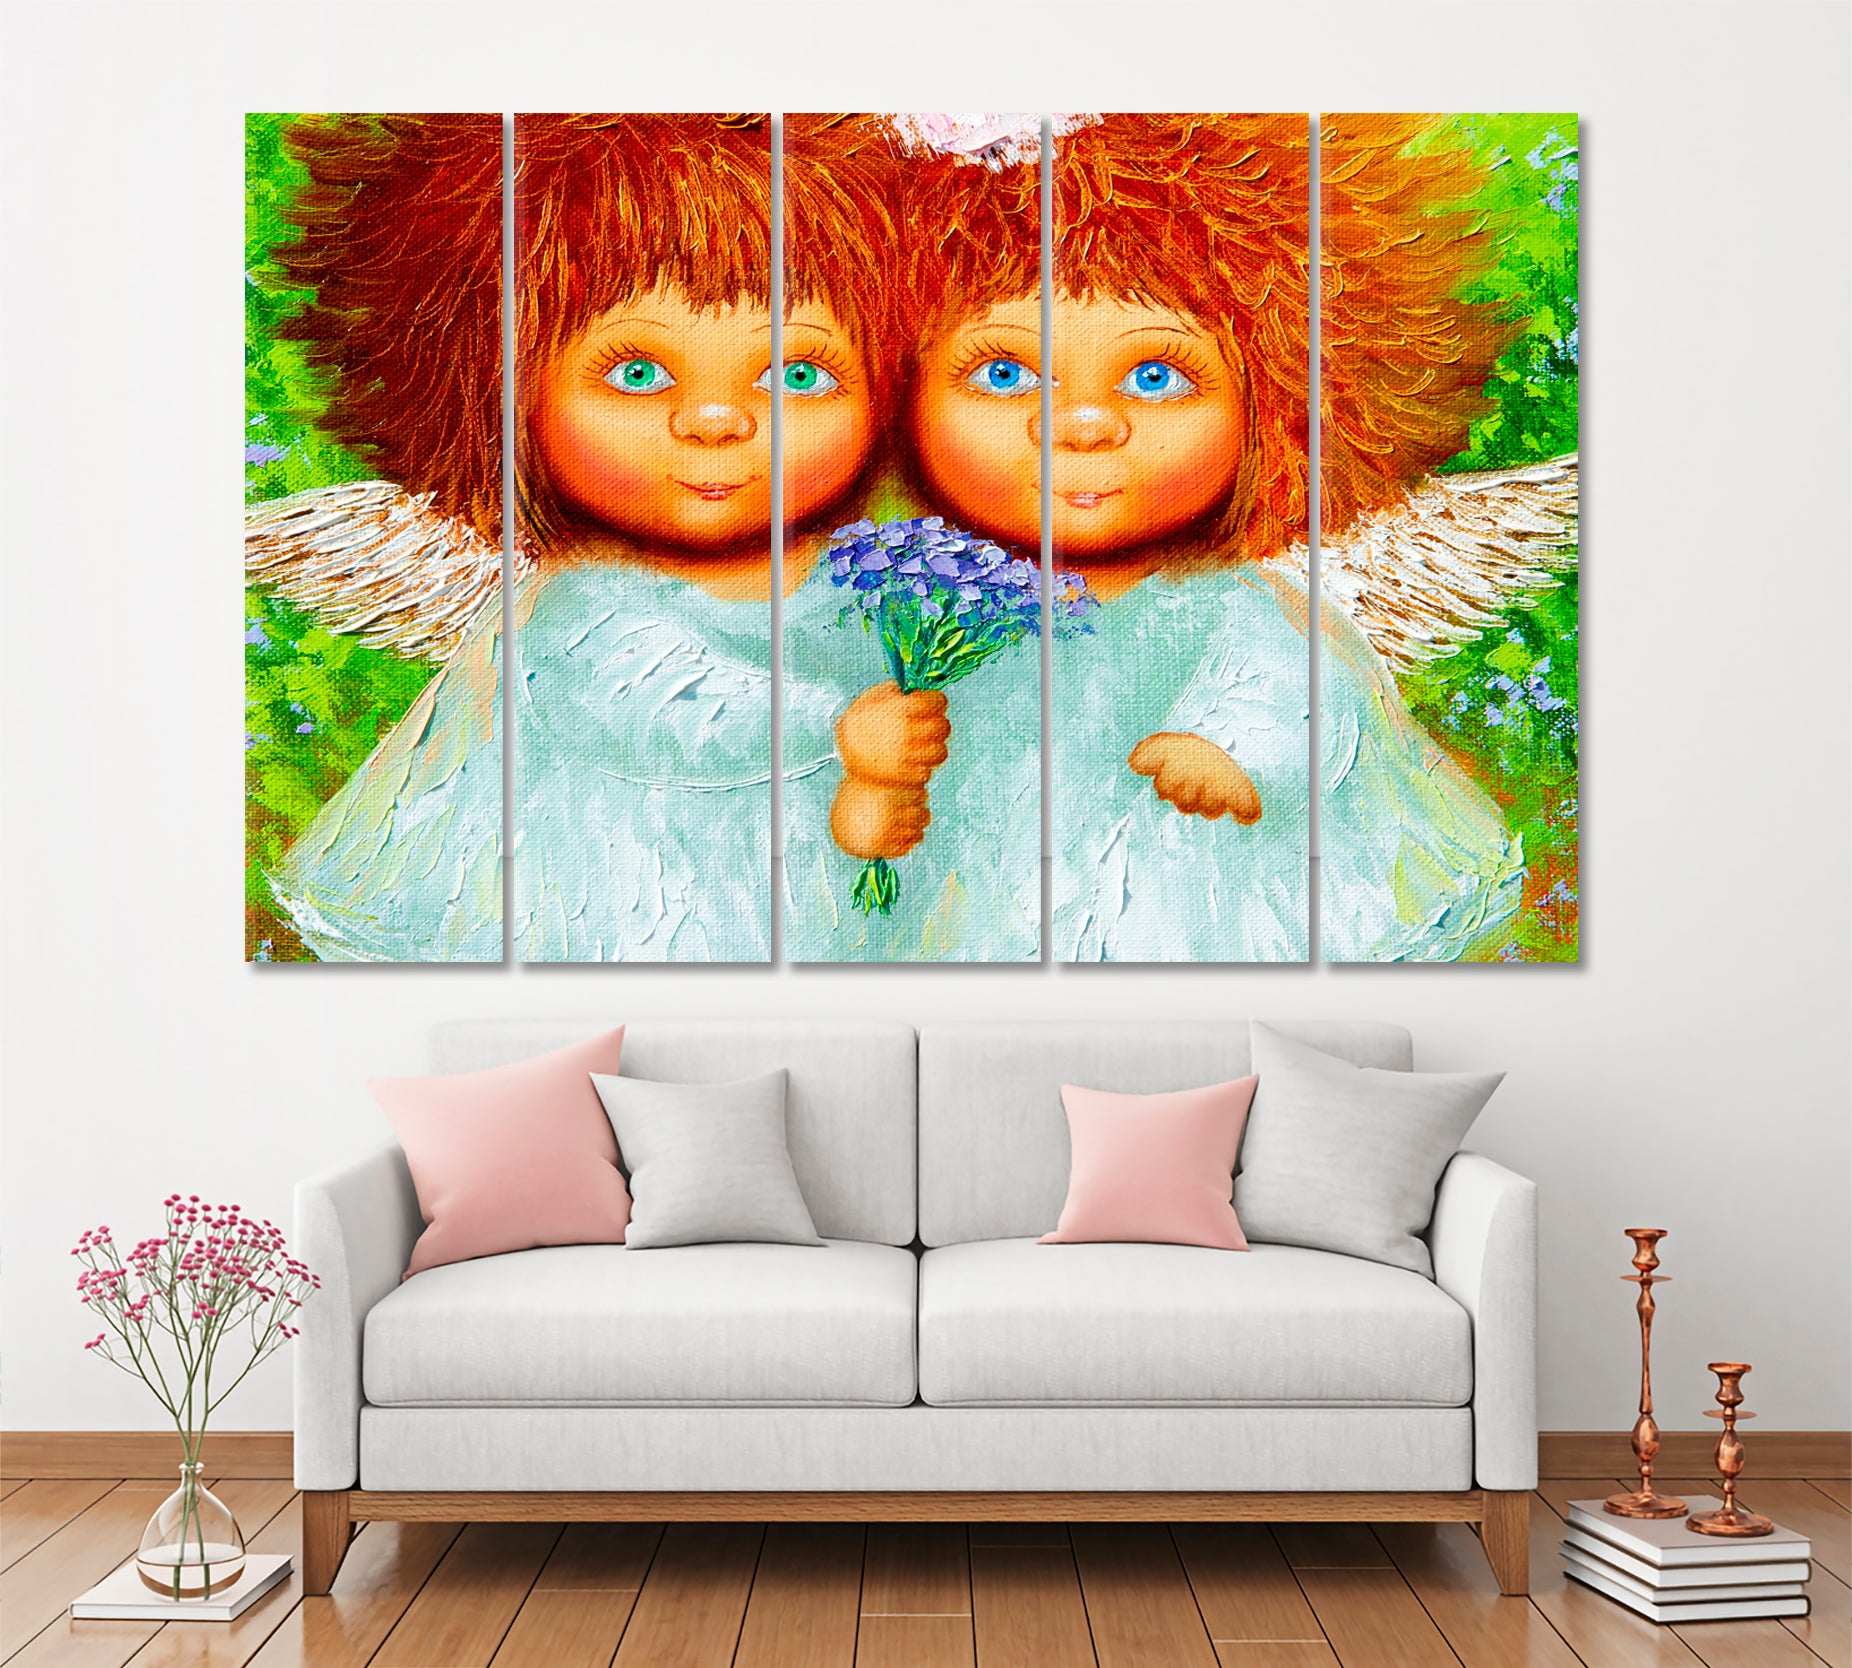 KID'S ART Two Cute Little Girls Shaggy Red Hair Kids Room Canvas Art Print Artesty 5 panels 36" x 24" 